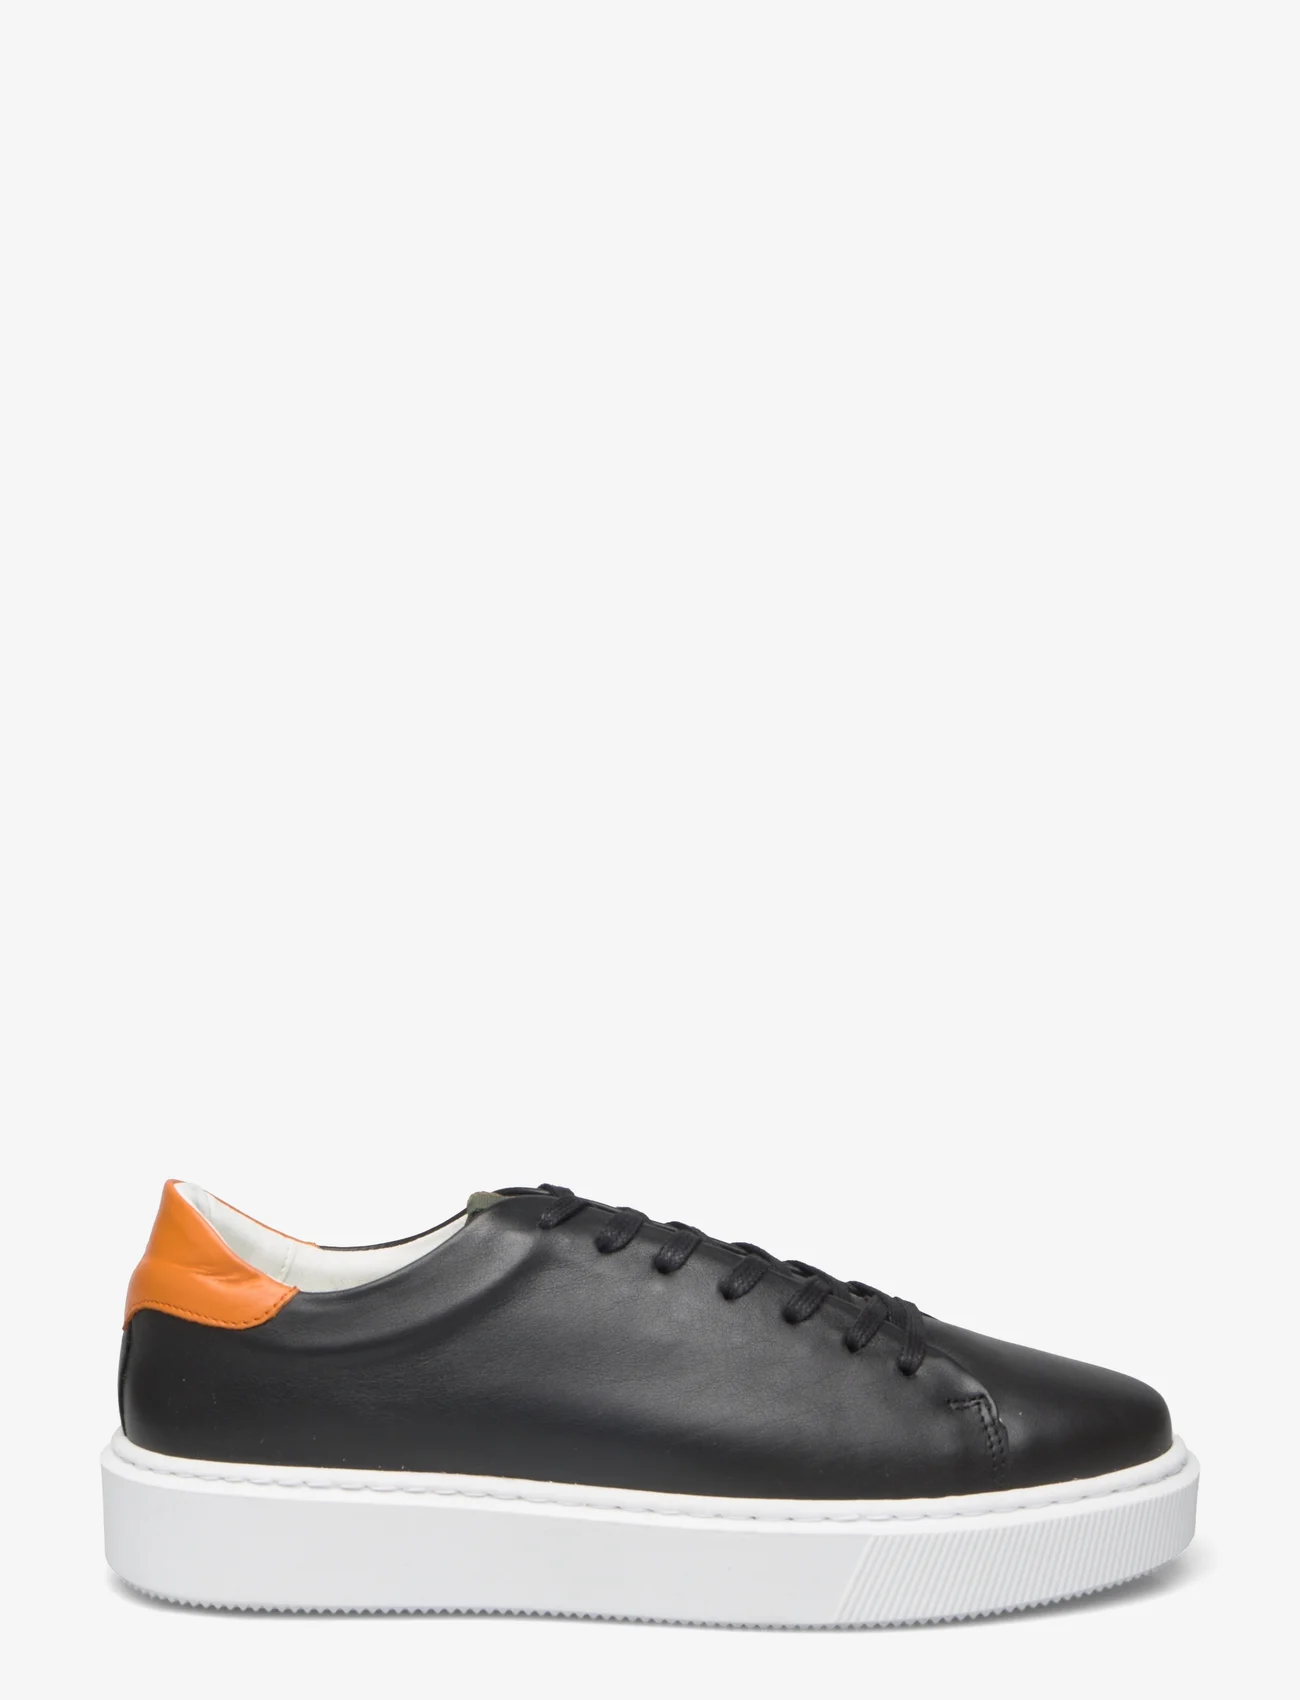 Playboy Footwear - Alex 2.0 - black leather/orange - 1